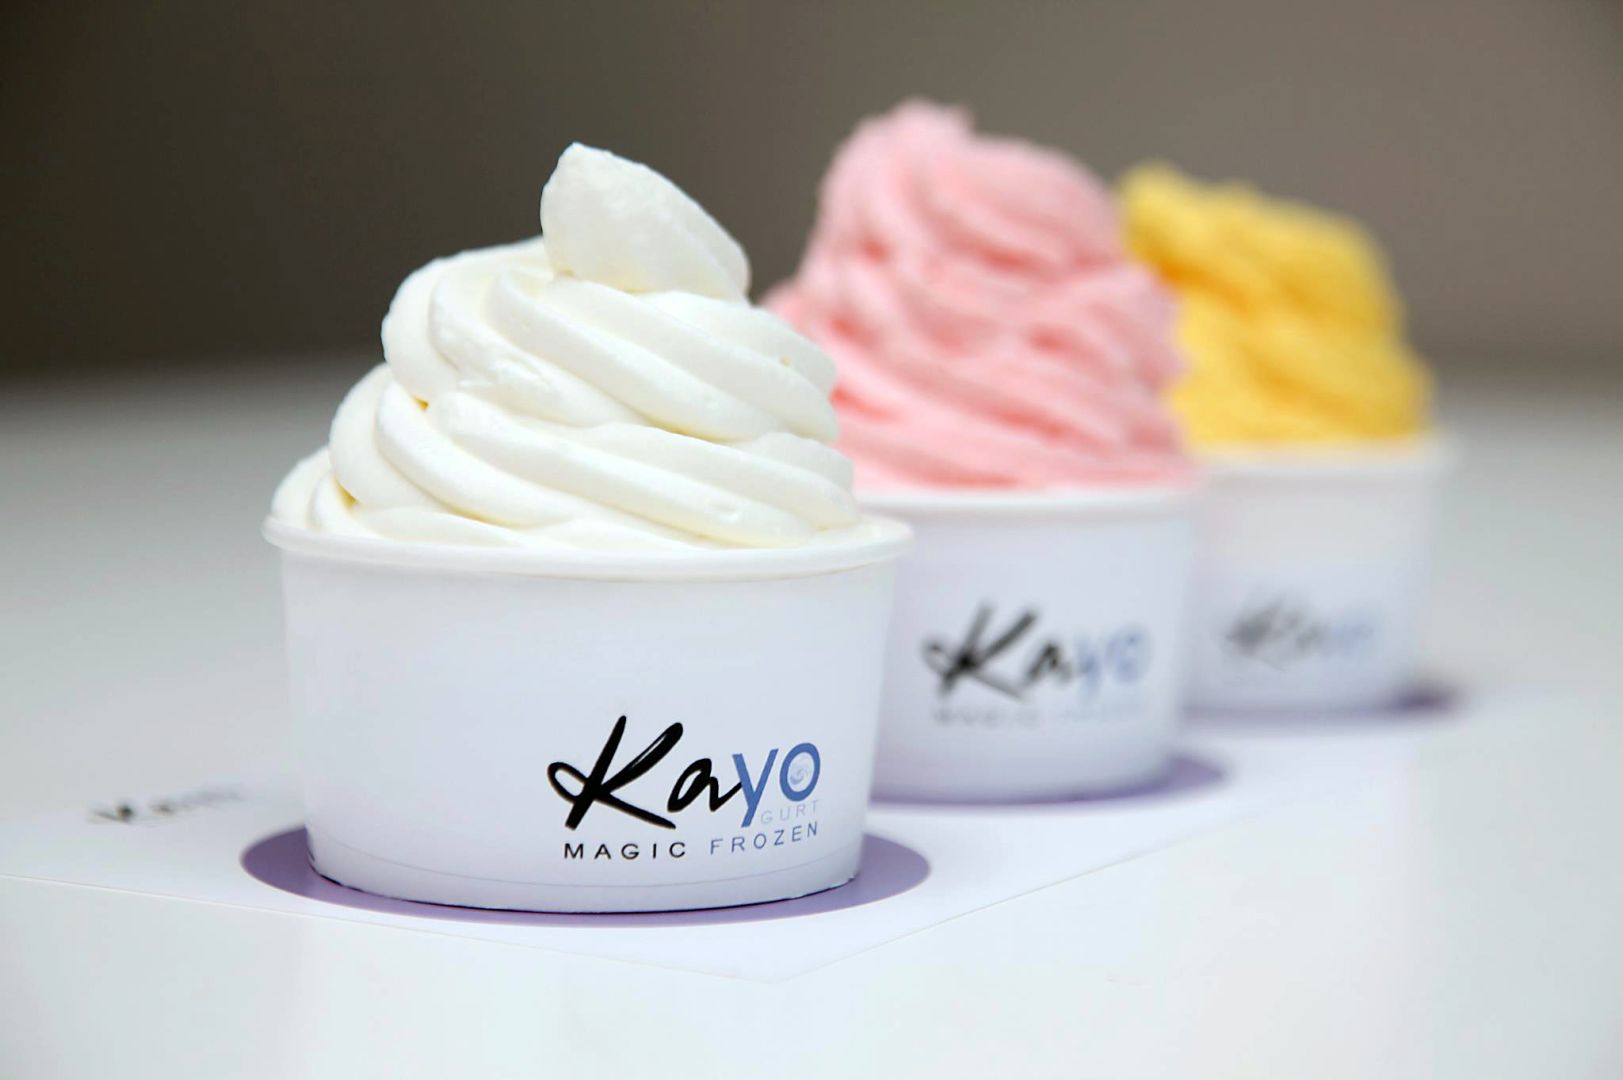 Kayak Ice Cream, Athens, Greece 